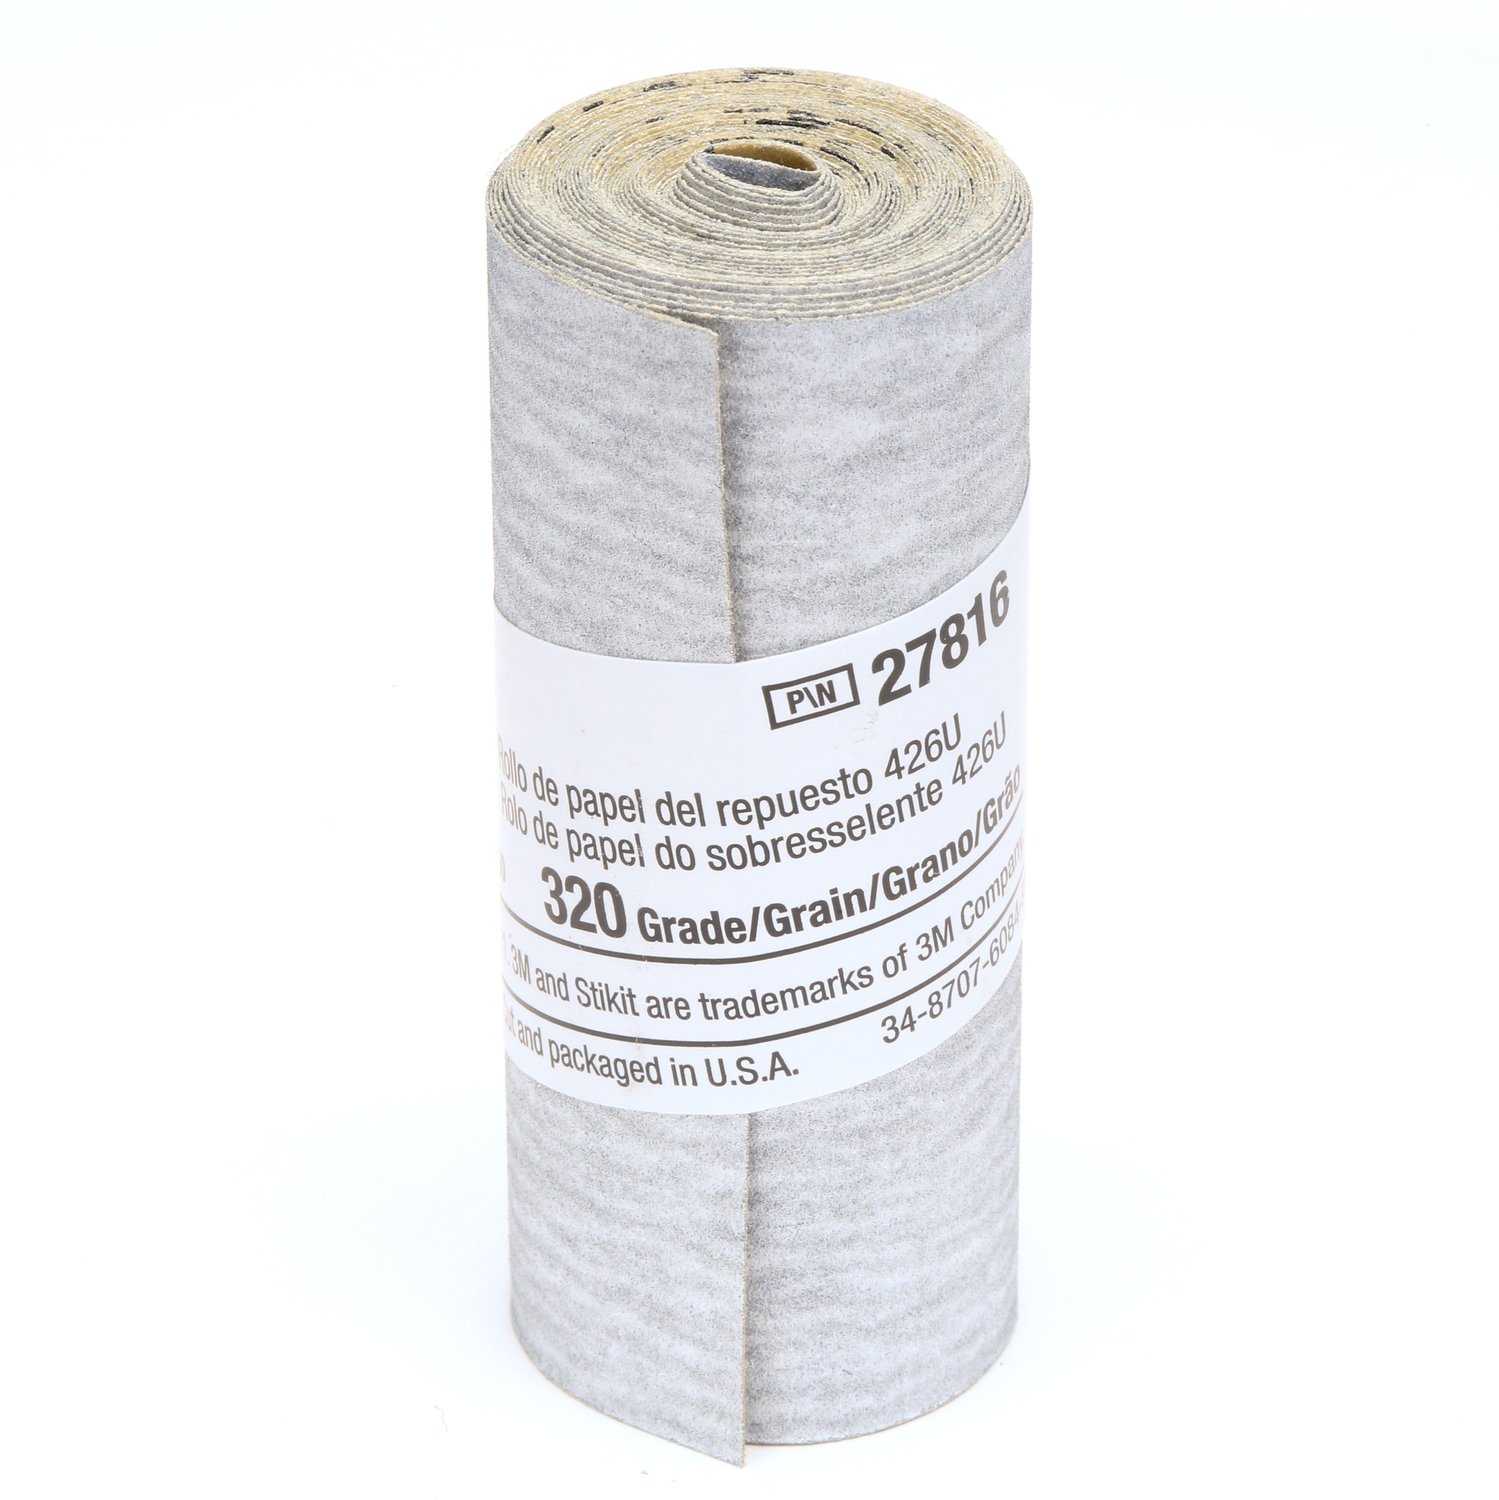 7100143208 - 3M Stikit Paper Refill Roll 426U, 320 A-weight, 2-1/2 in x 100 in,
10/Carton, 50 ea/Case